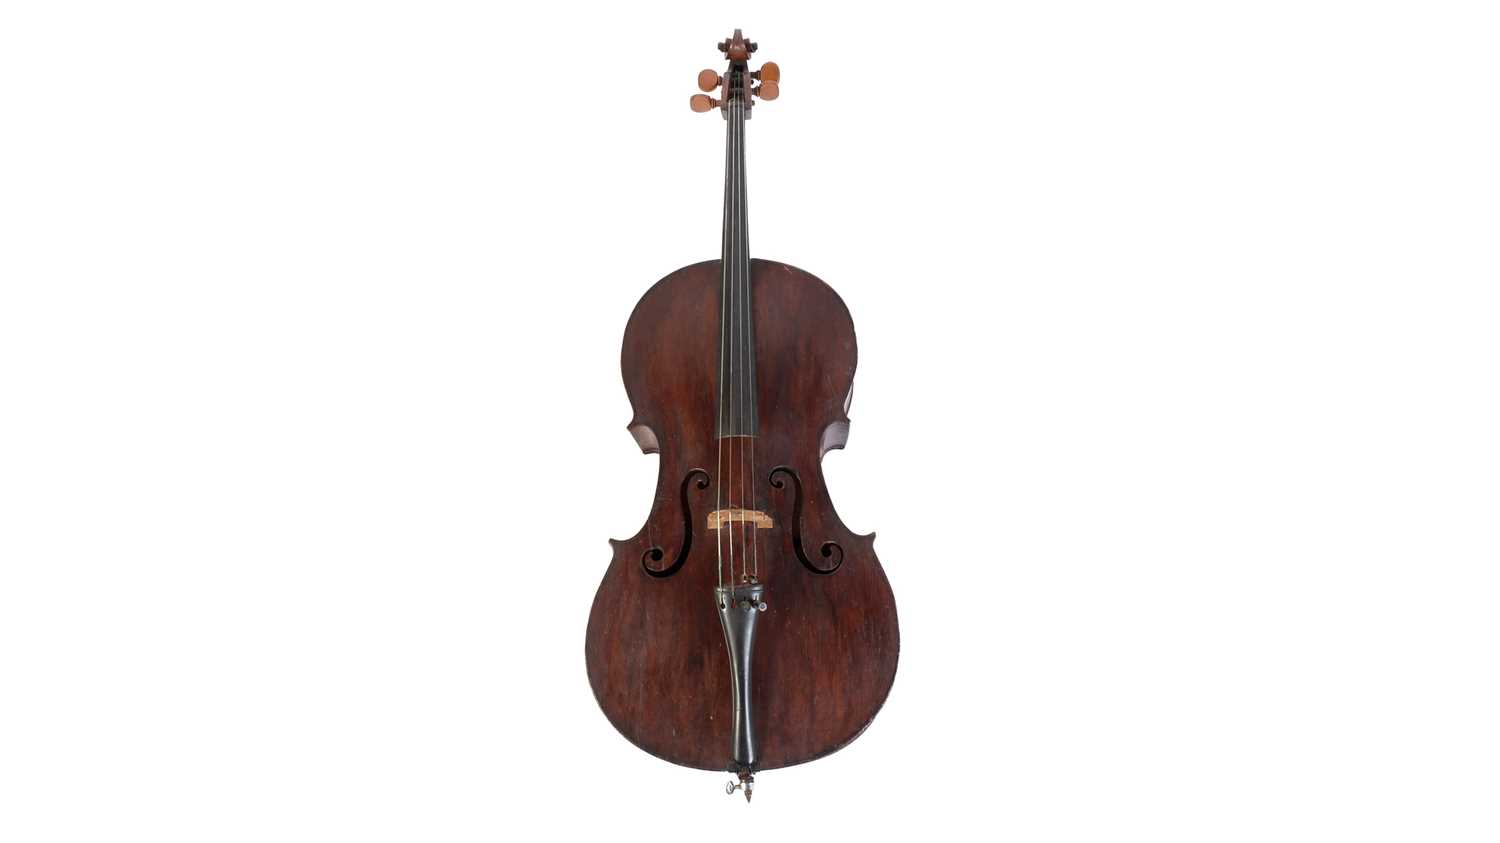 762 - Early 19th Century English cello